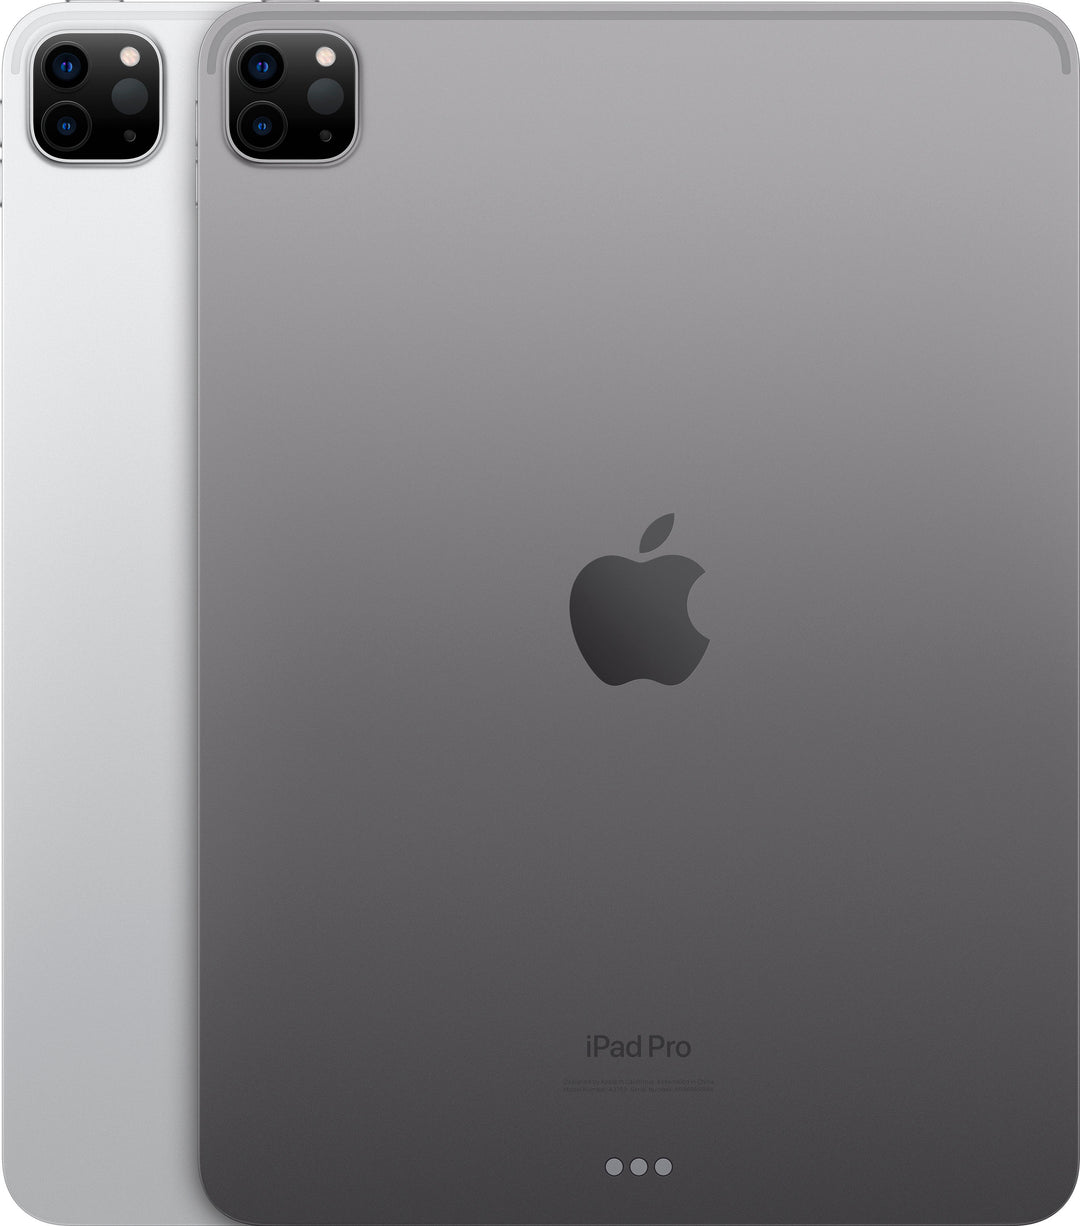 Apple - 12.9-Inch iPad Pro (Latest Model) with Wi-Fi - 512GB - Silver_5